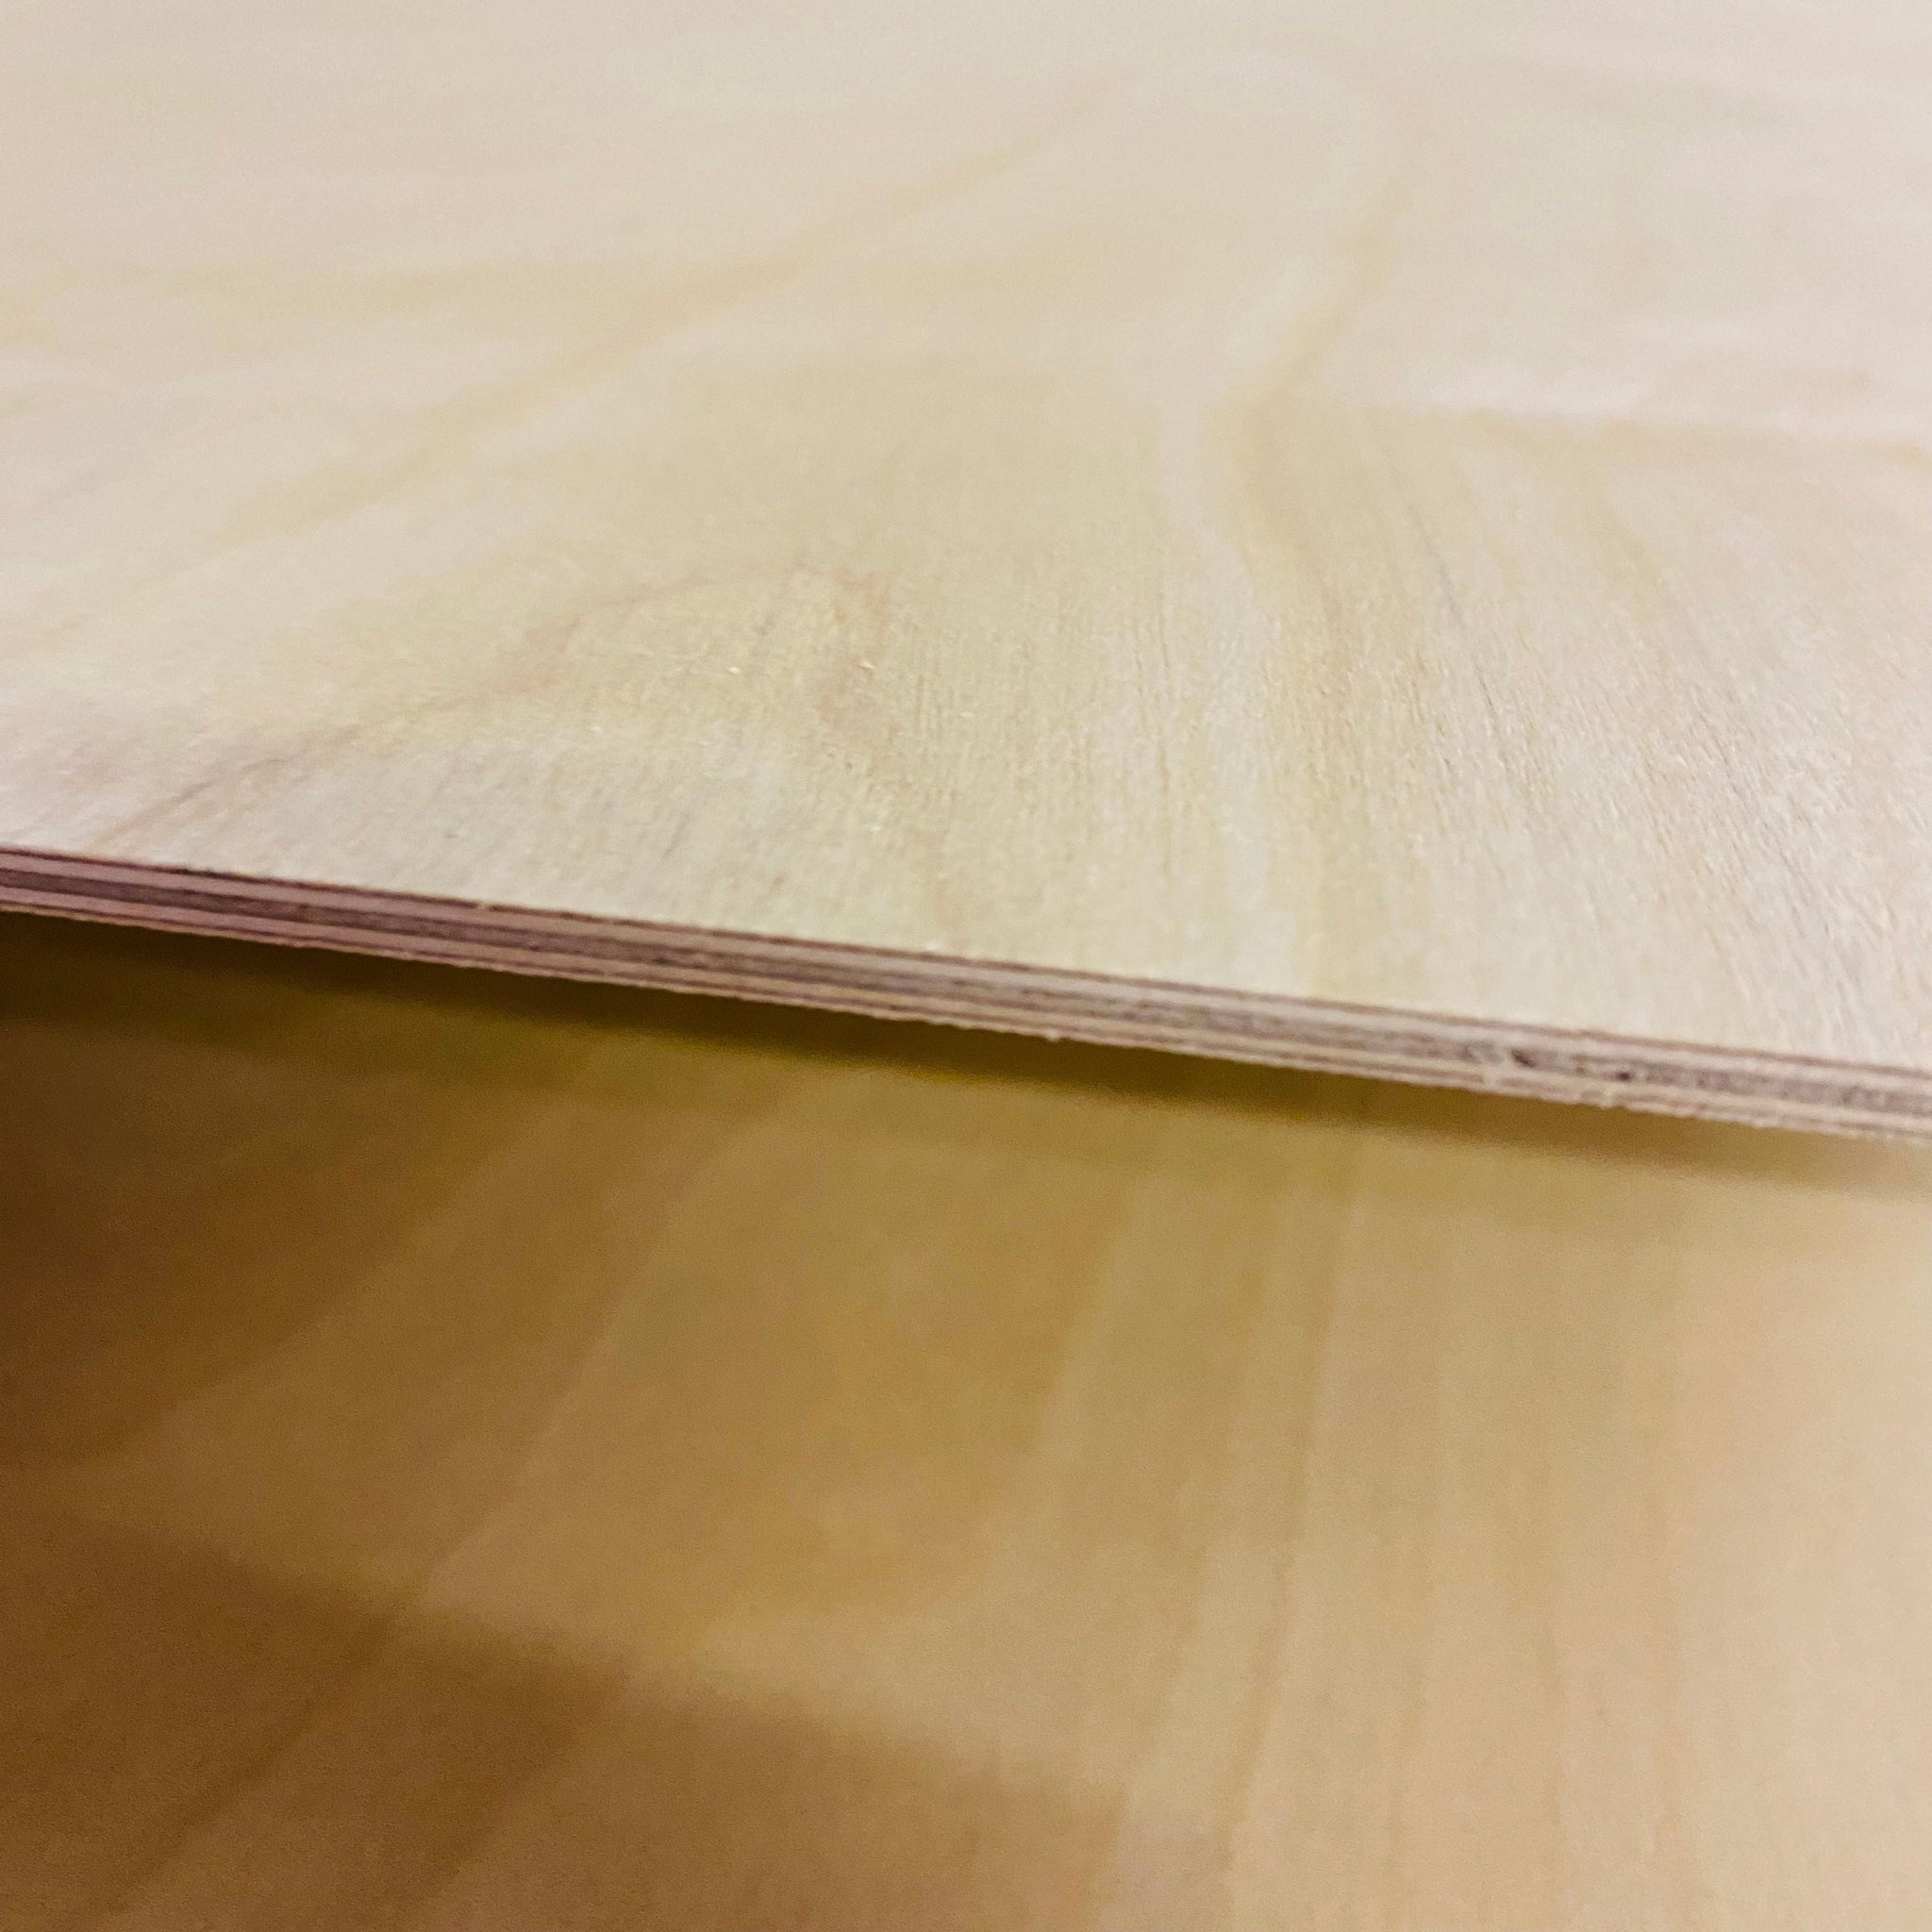 3mm Normal plywood (Furniture Grade)